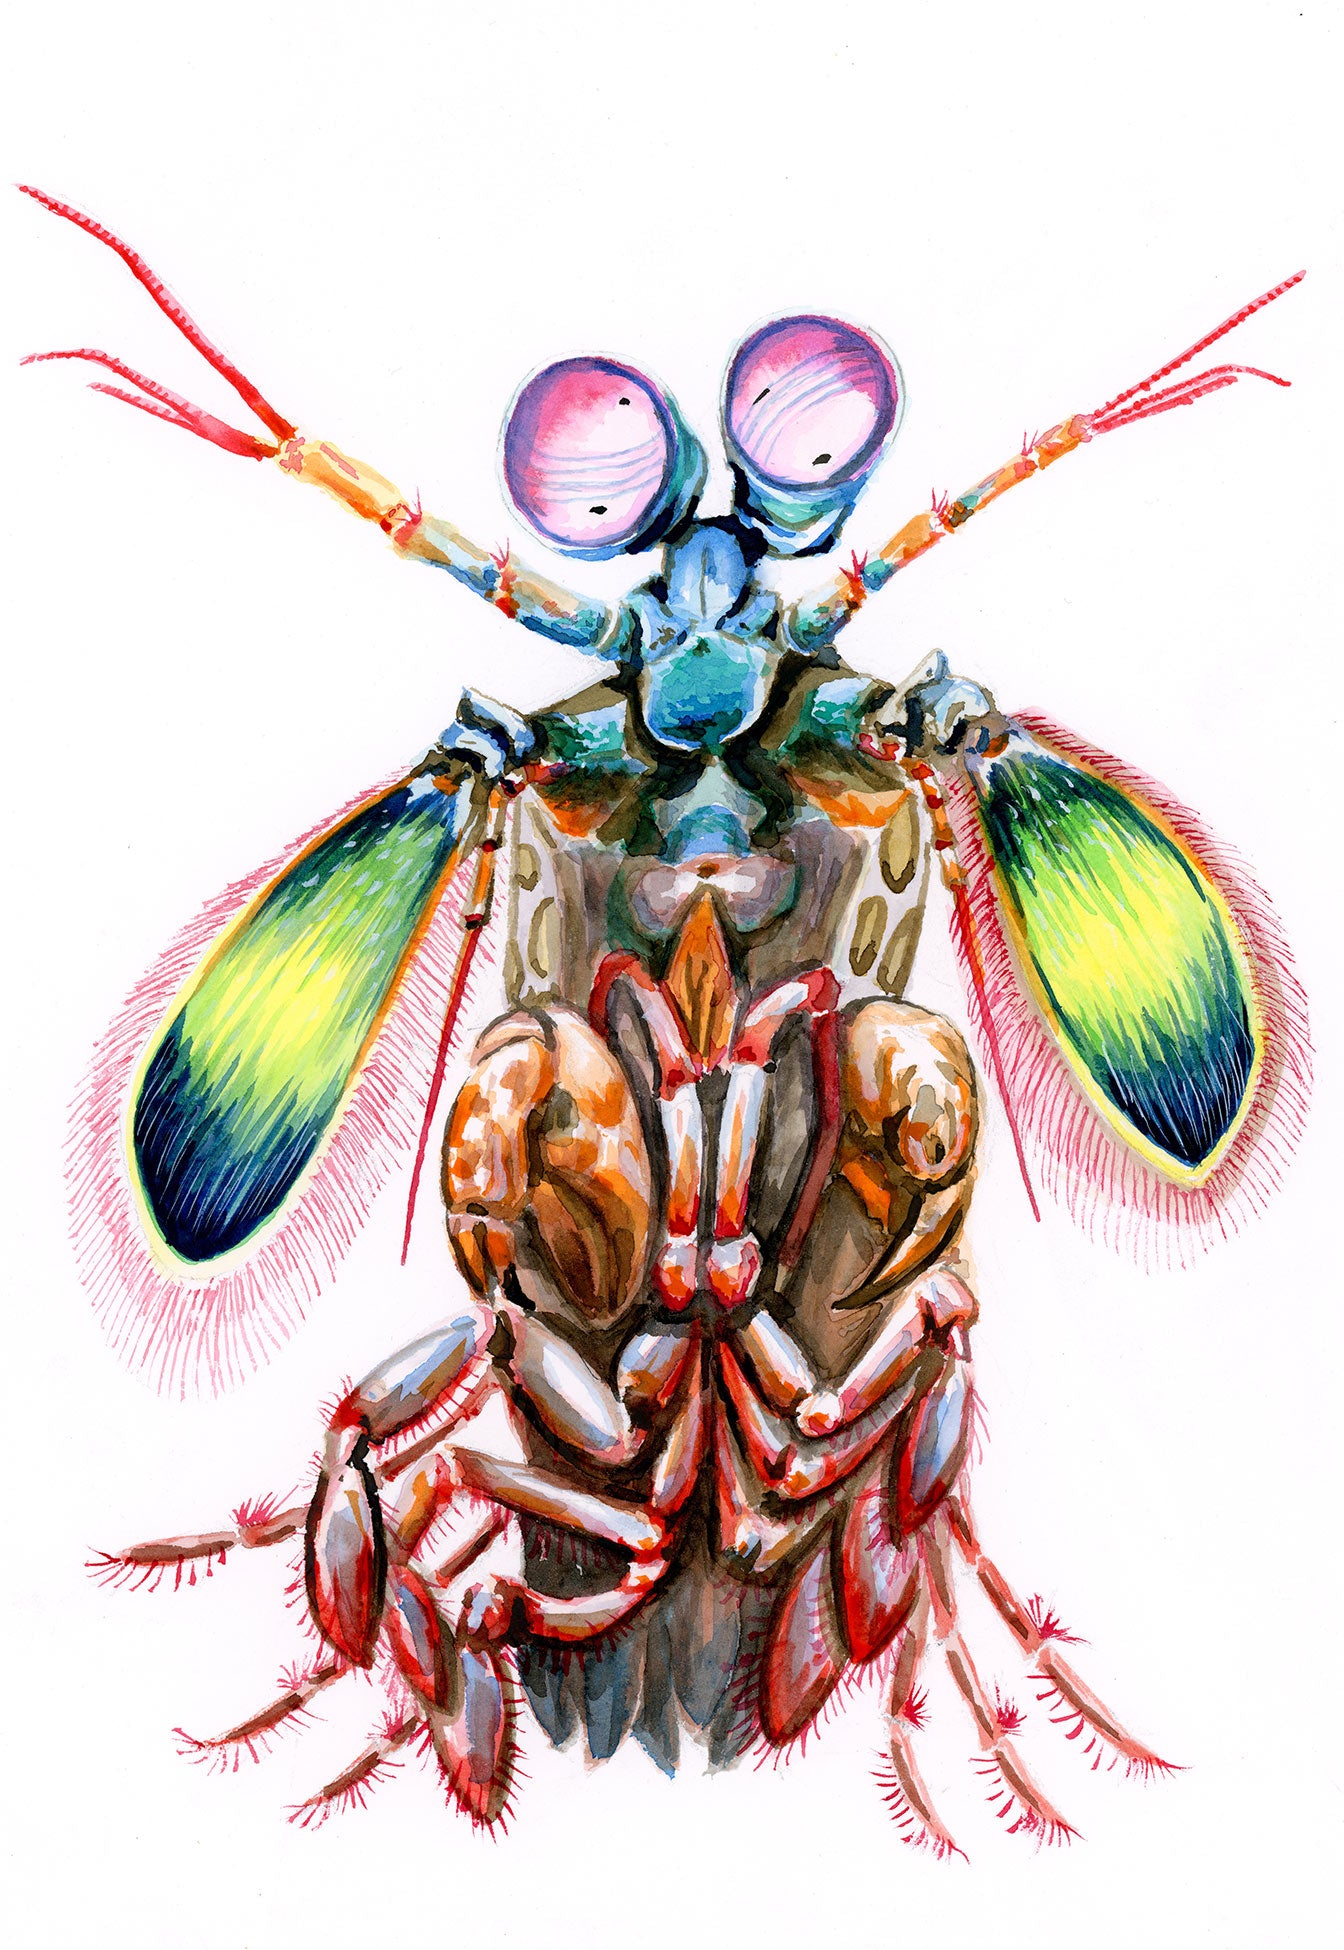 ORIGINAL PAINTING Mantis Shrimp in watercolor 7"x10"(18x25cm)